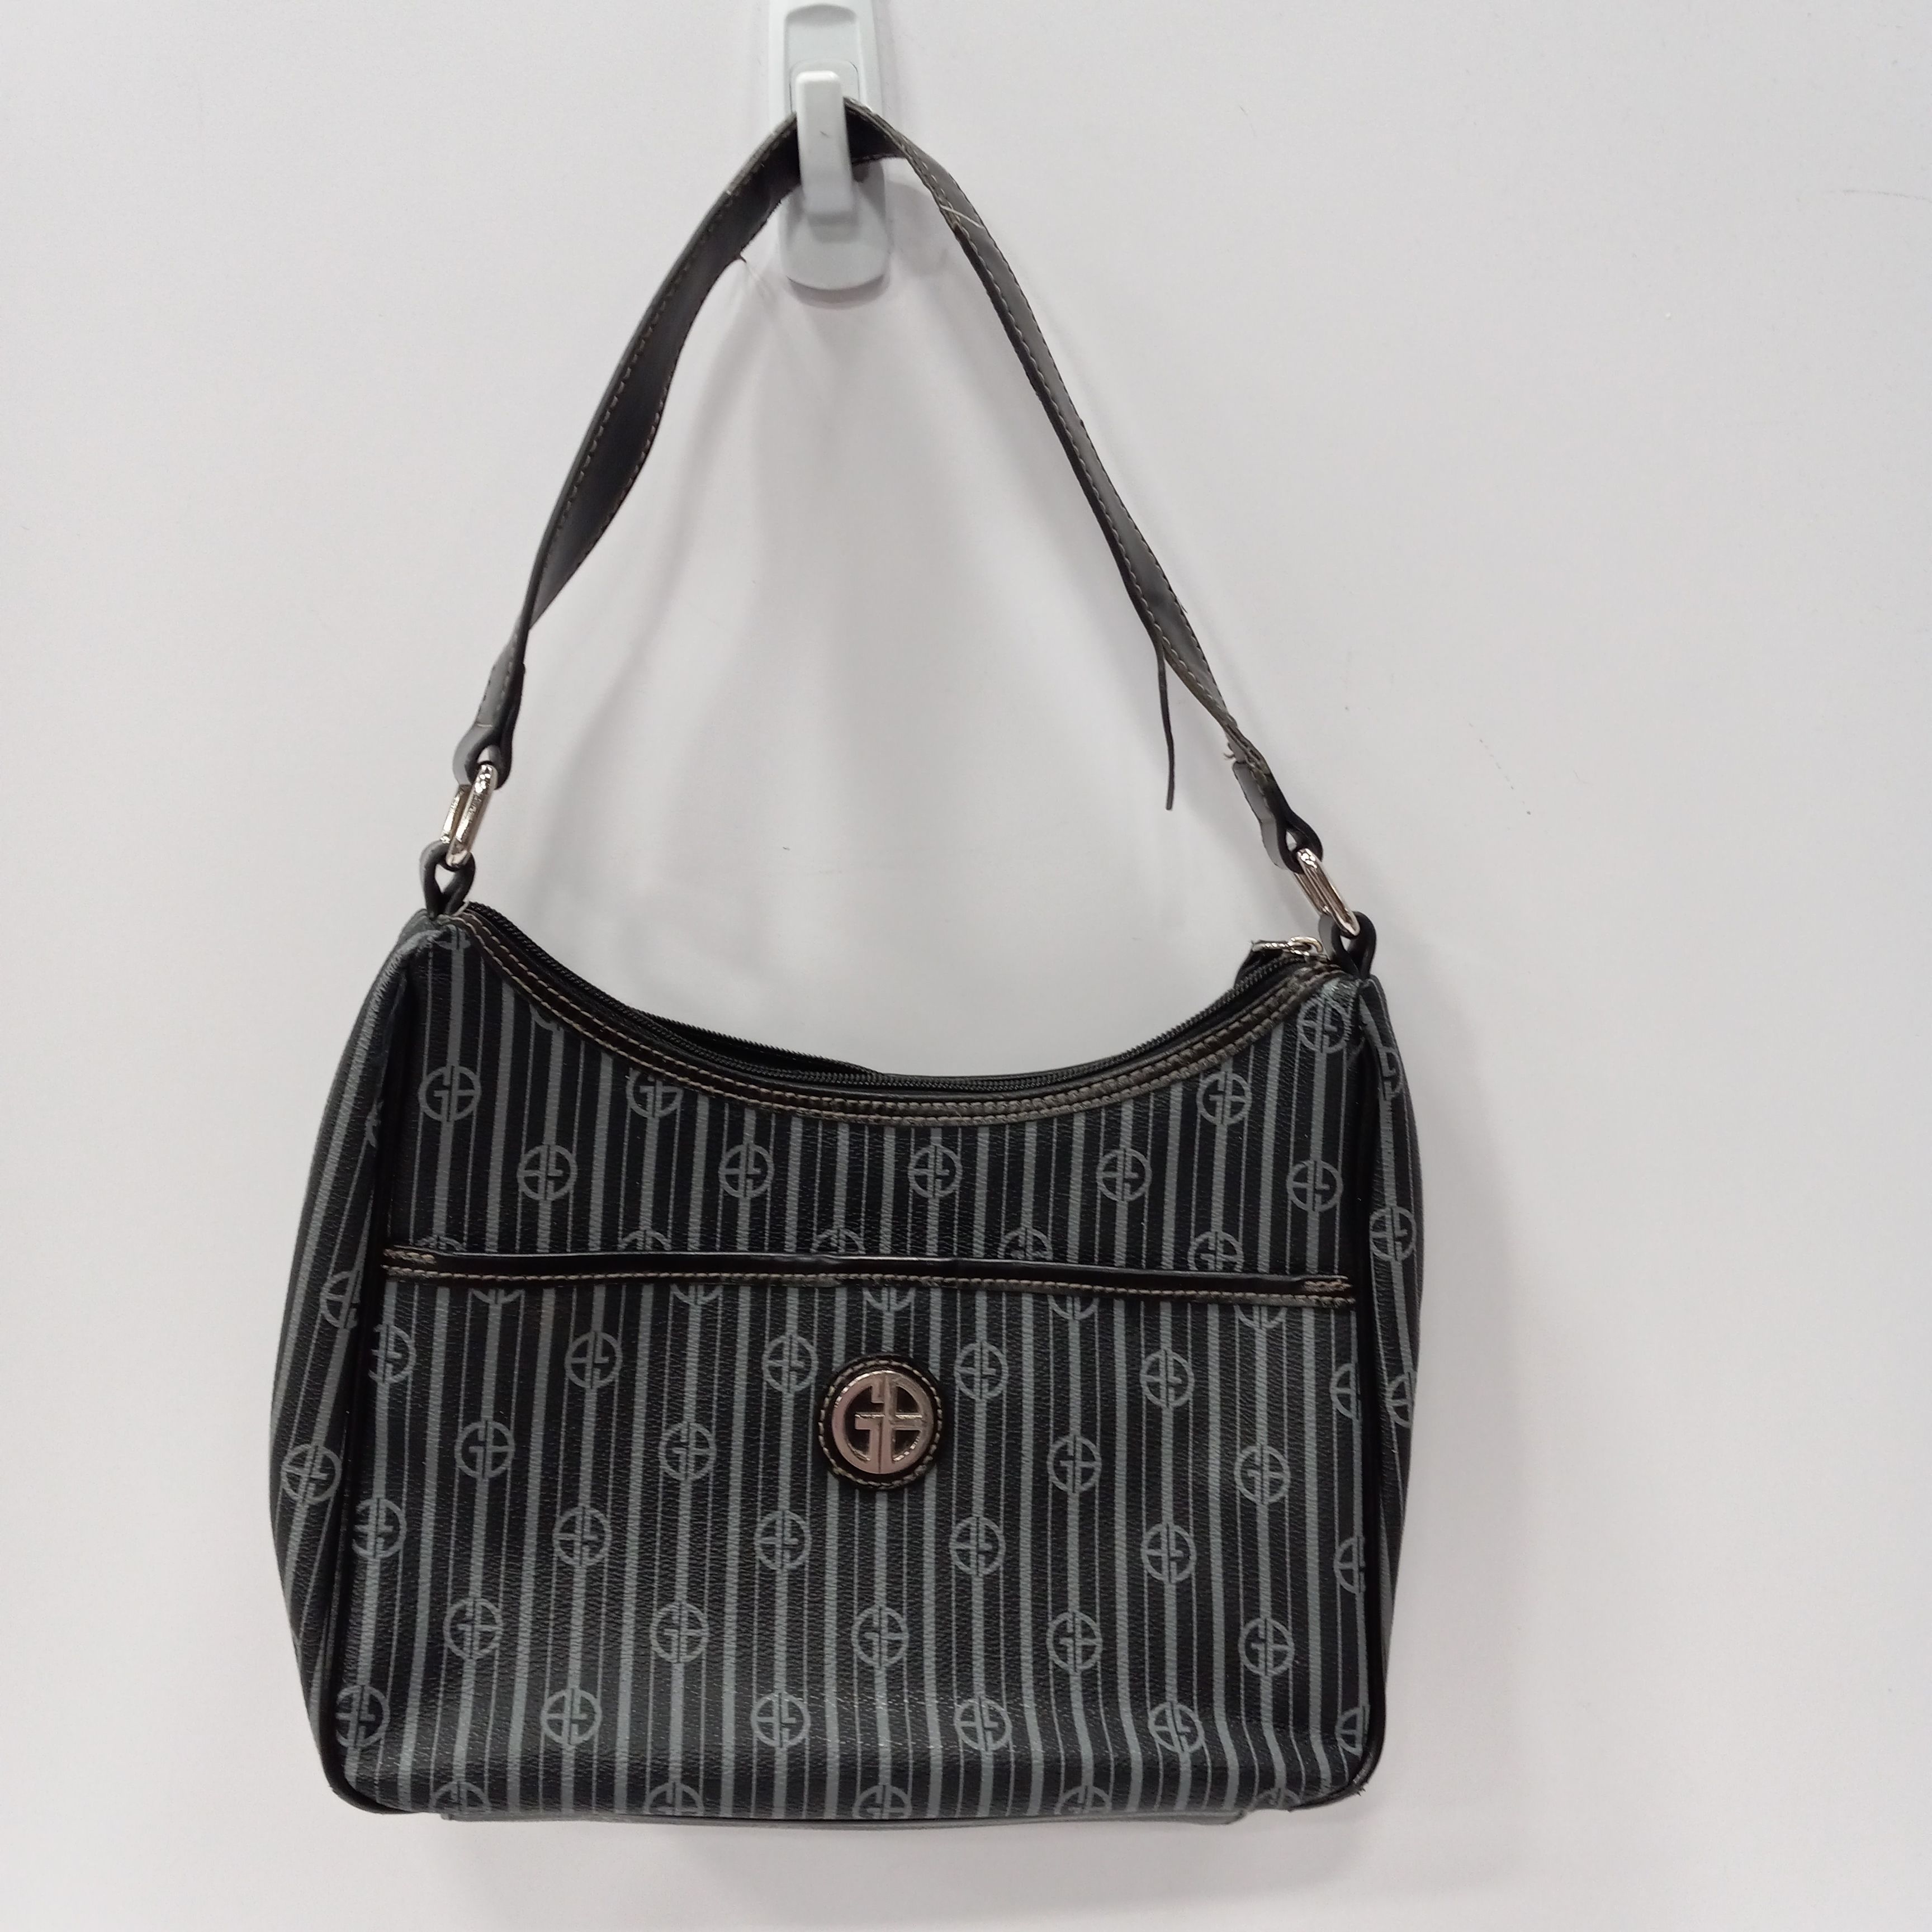 Giani Bernini Black Leather Hobo Shoulder Bag Purse w/ Built-in Wallet |  Leather hobo, Shoulder bag, Leather